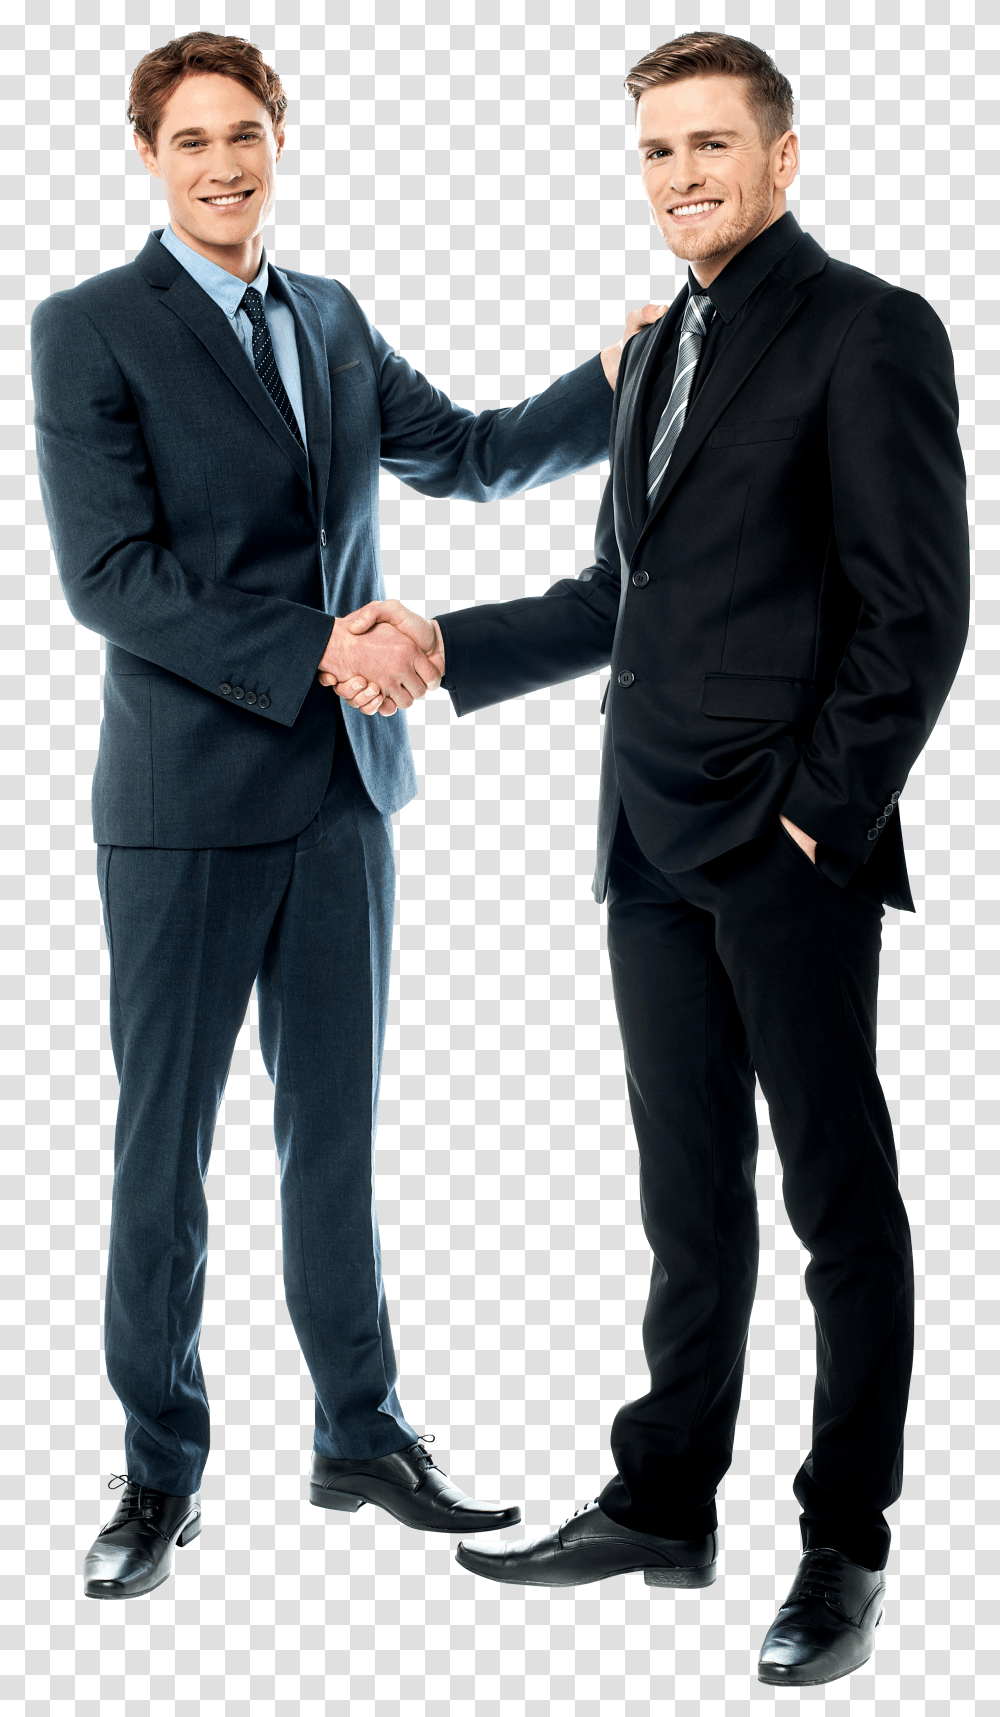 Business Handshake Image Businessman With Background Transparent Png